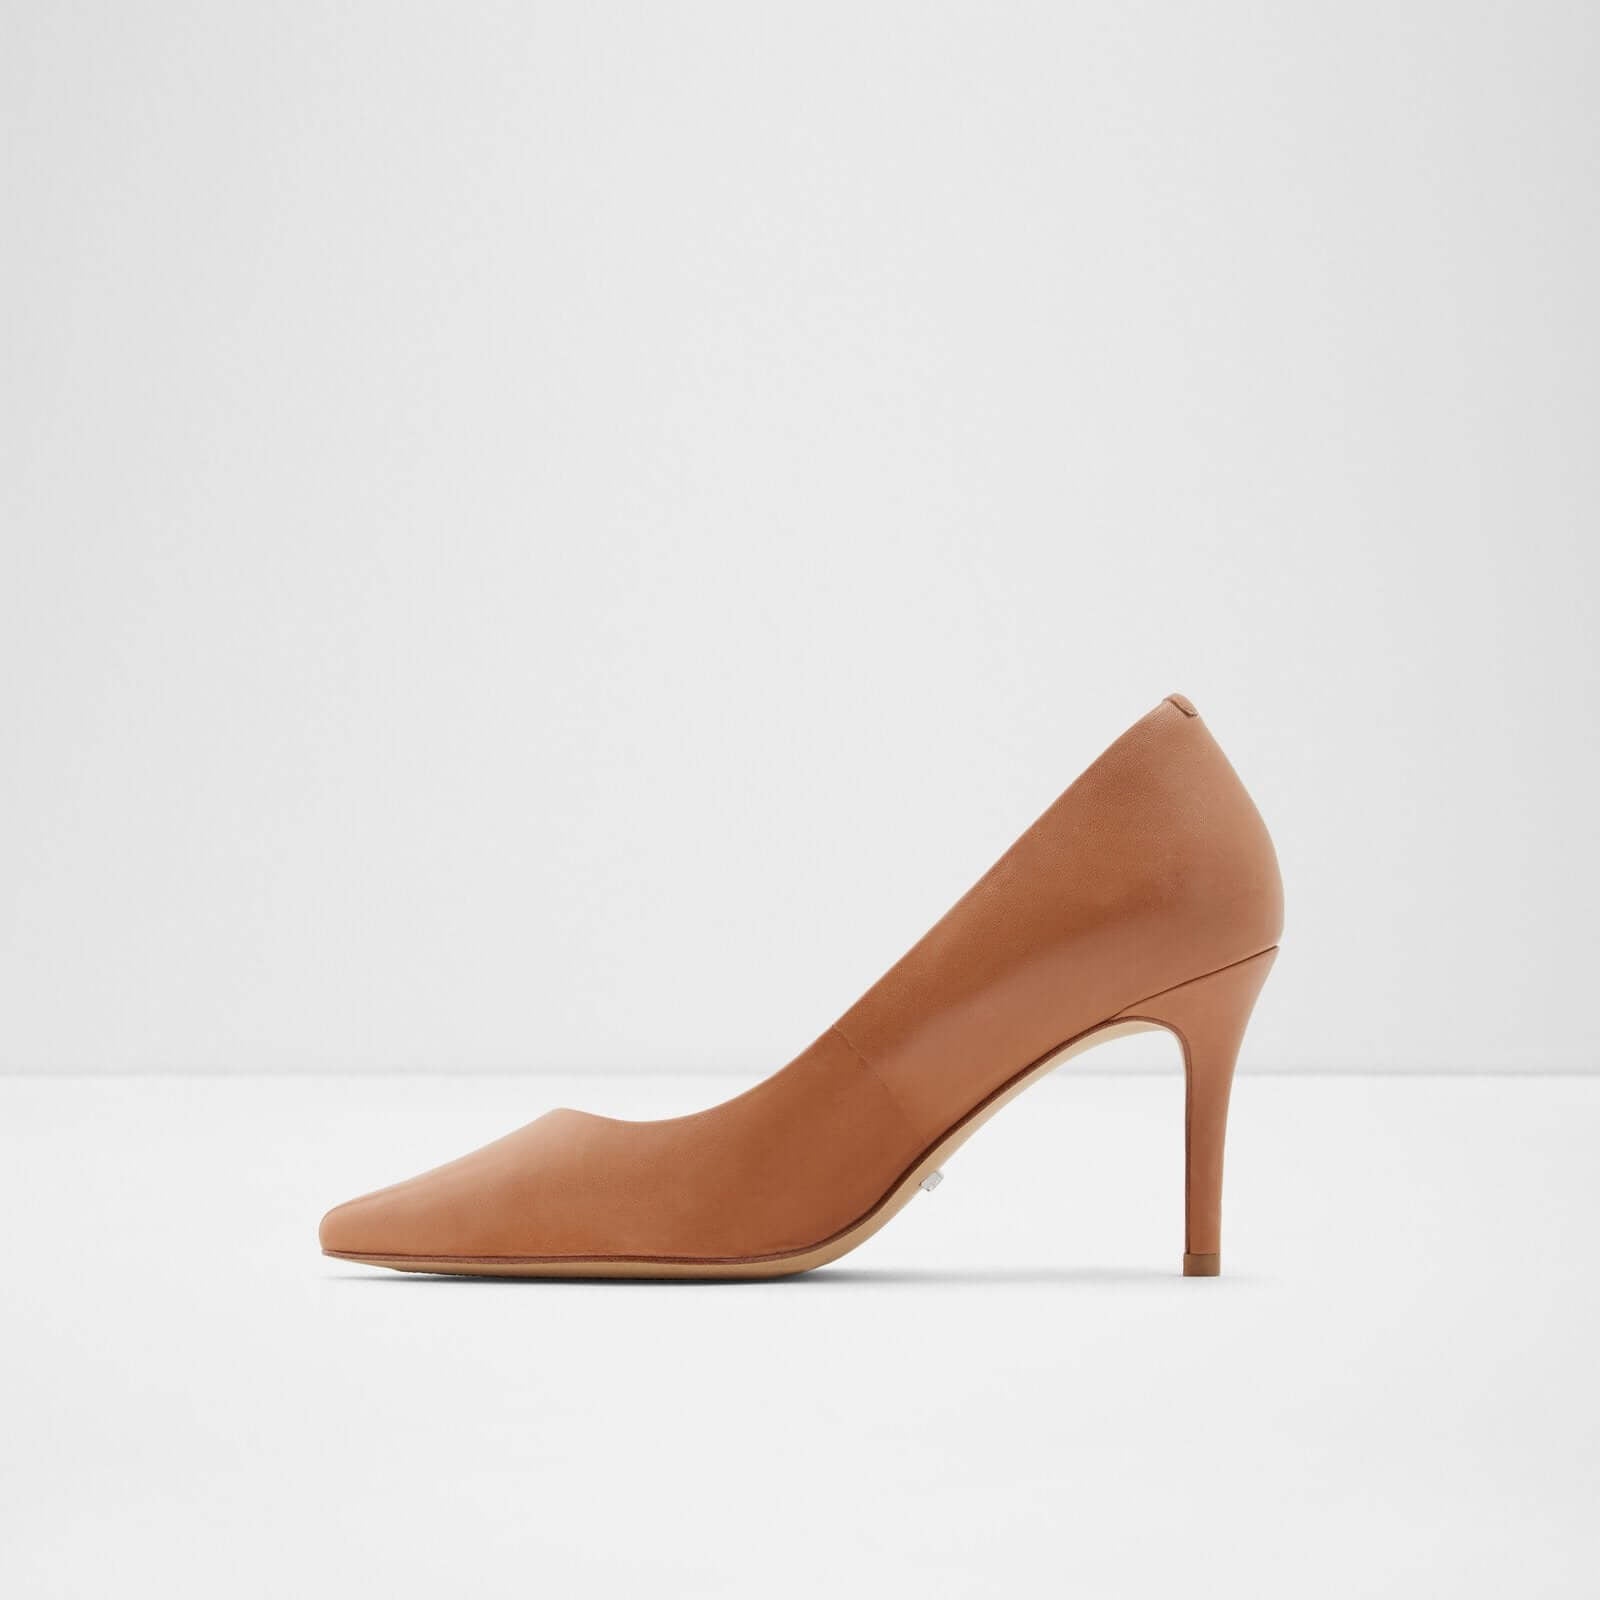 Aldo Women's Heeled Shoes Coronitiflex (Cognac) – ALDO UK